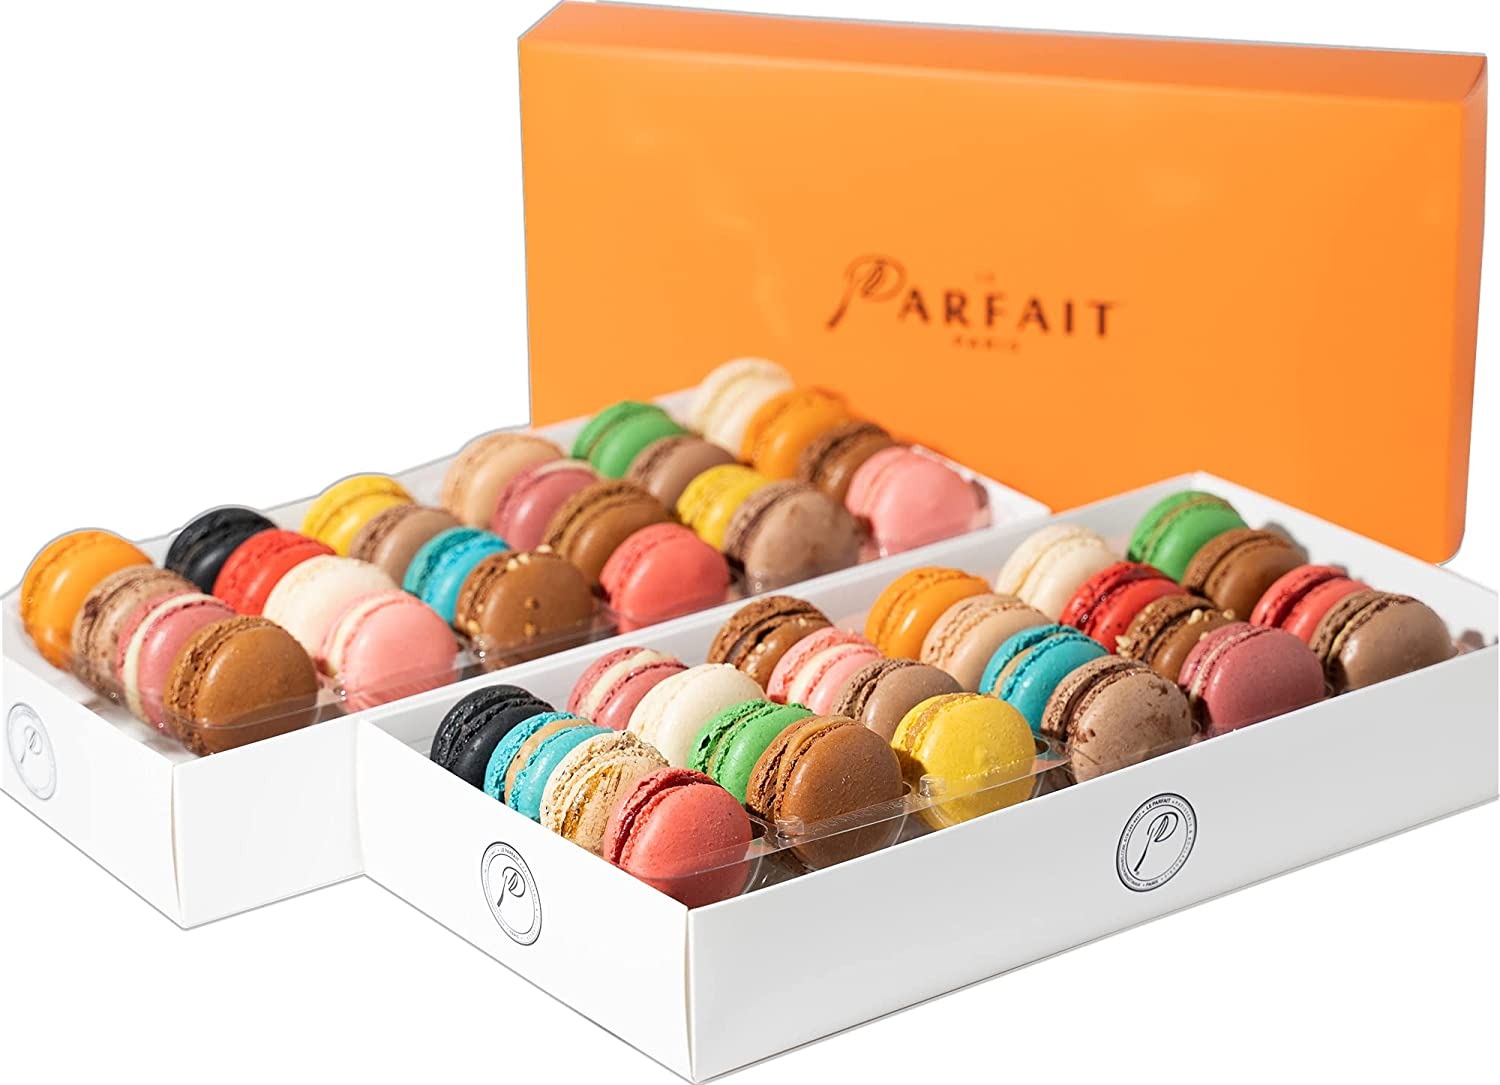 Parfait Paris Macaron Variety Pack